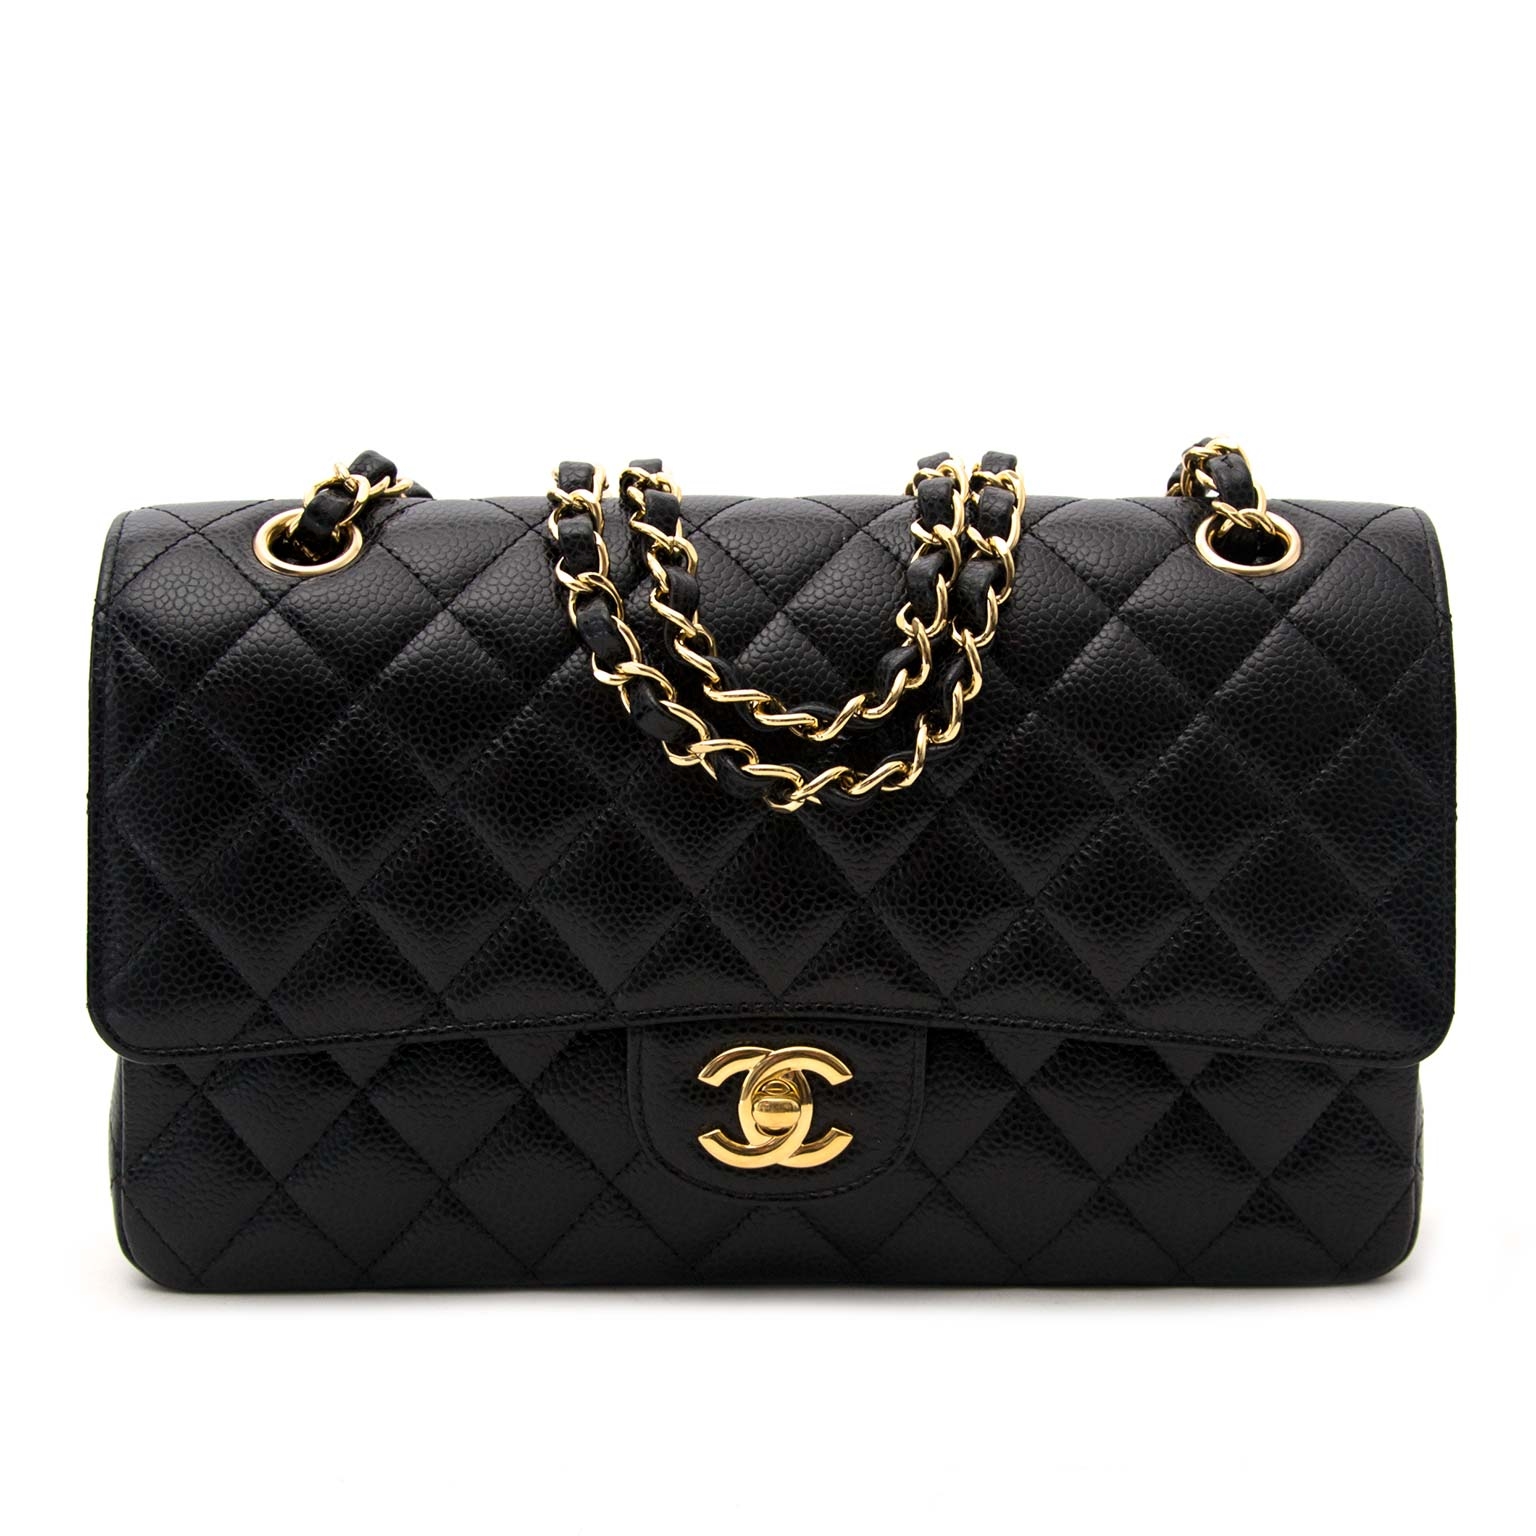 CHANEL CHANEL Classic Flap Medium Bags  Handbags for Women  Authenticity  Guaranteed  eBay